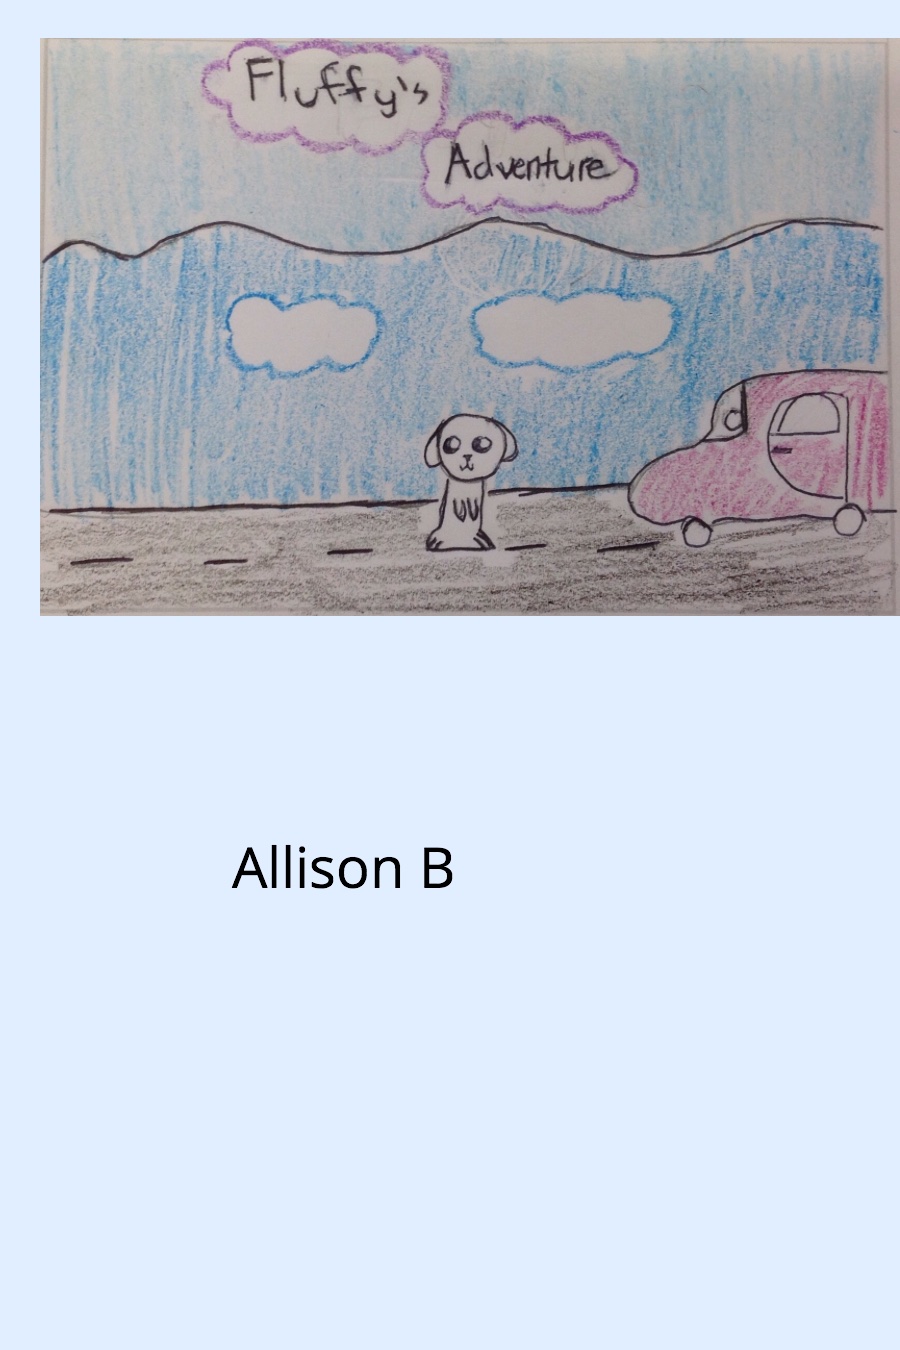 Fluffy’s Adventure by Allison B